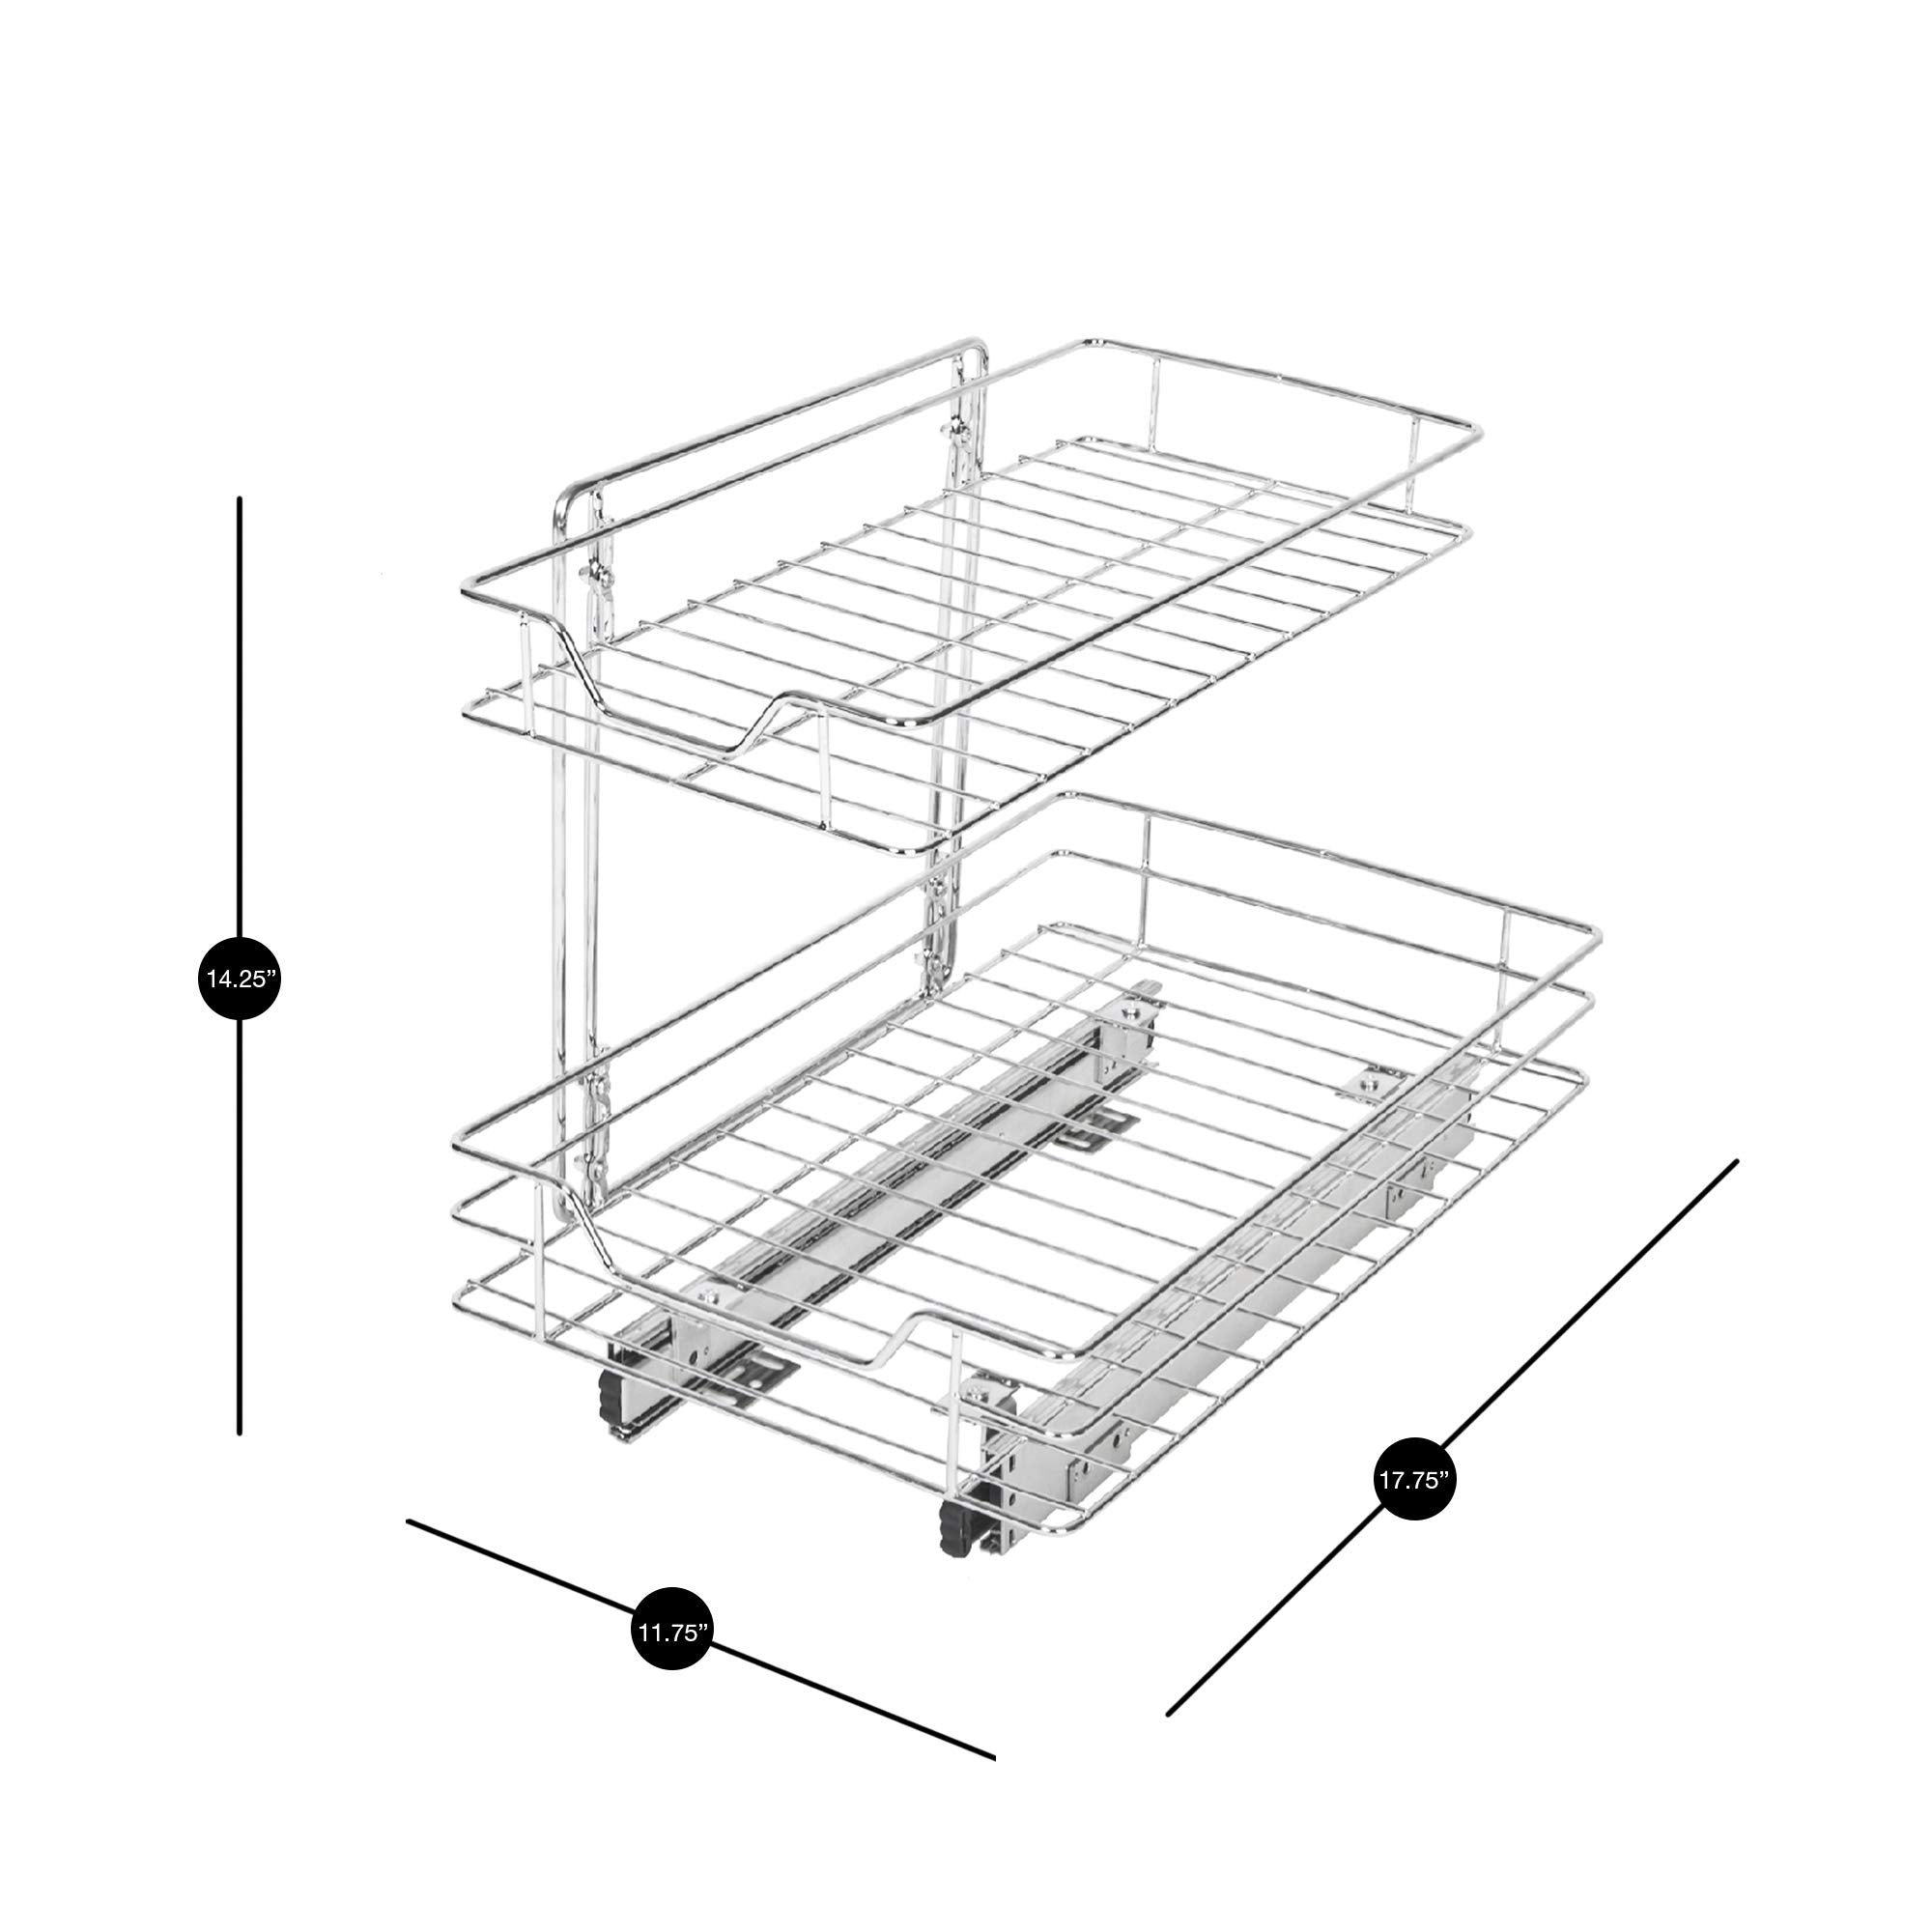 Sliding Pull Out Metal Cabinet Shelf - Multiple Sizes - Smart Design® 17